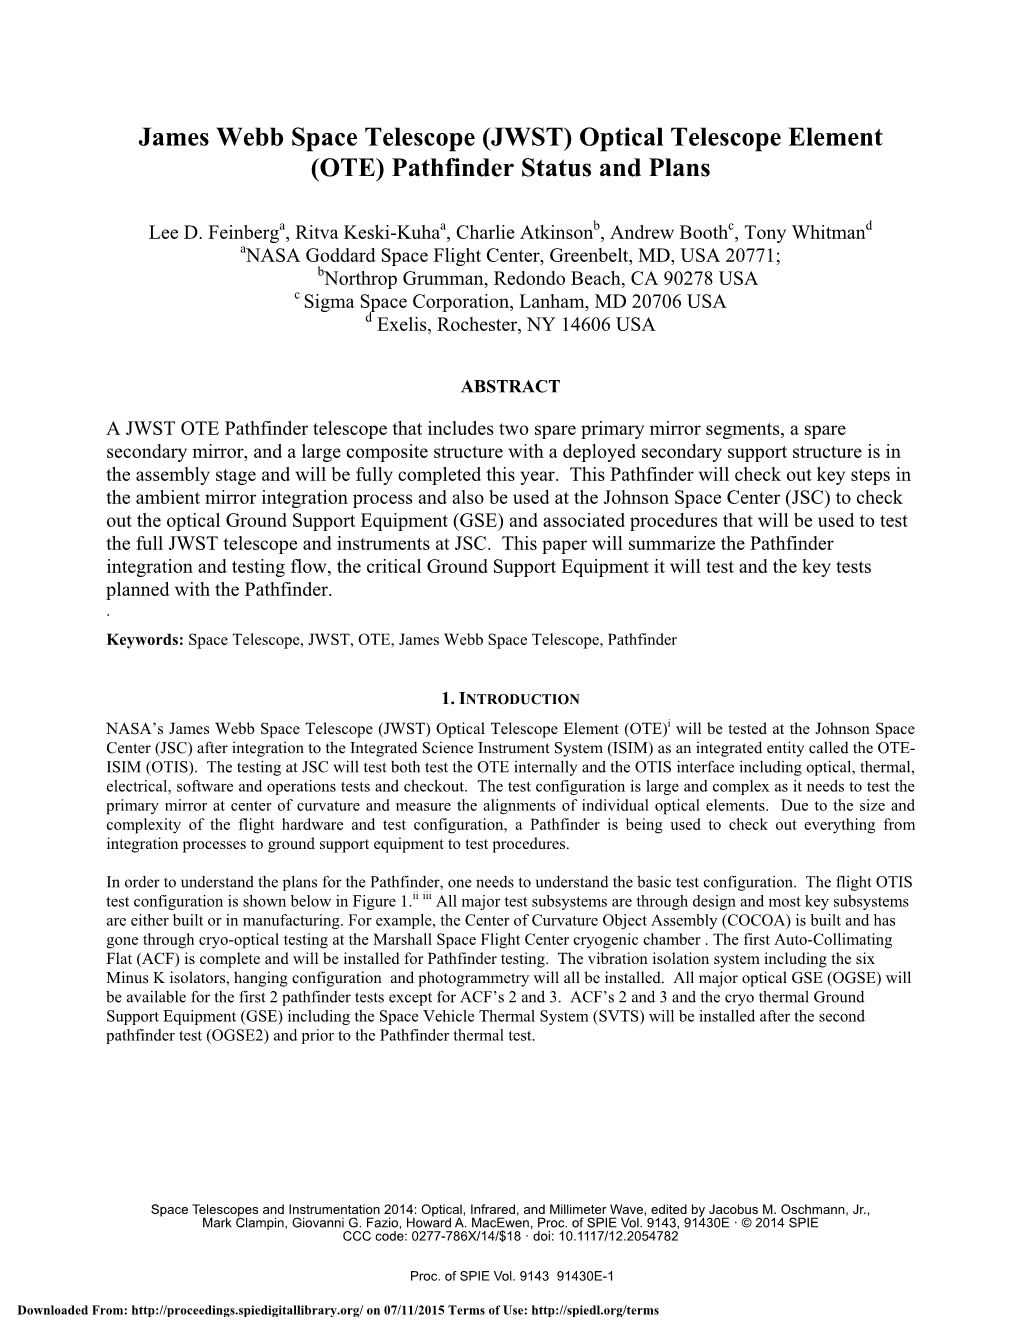 (JWST) Optical Telescope Element (OTE) Pathfinder Status and Plans